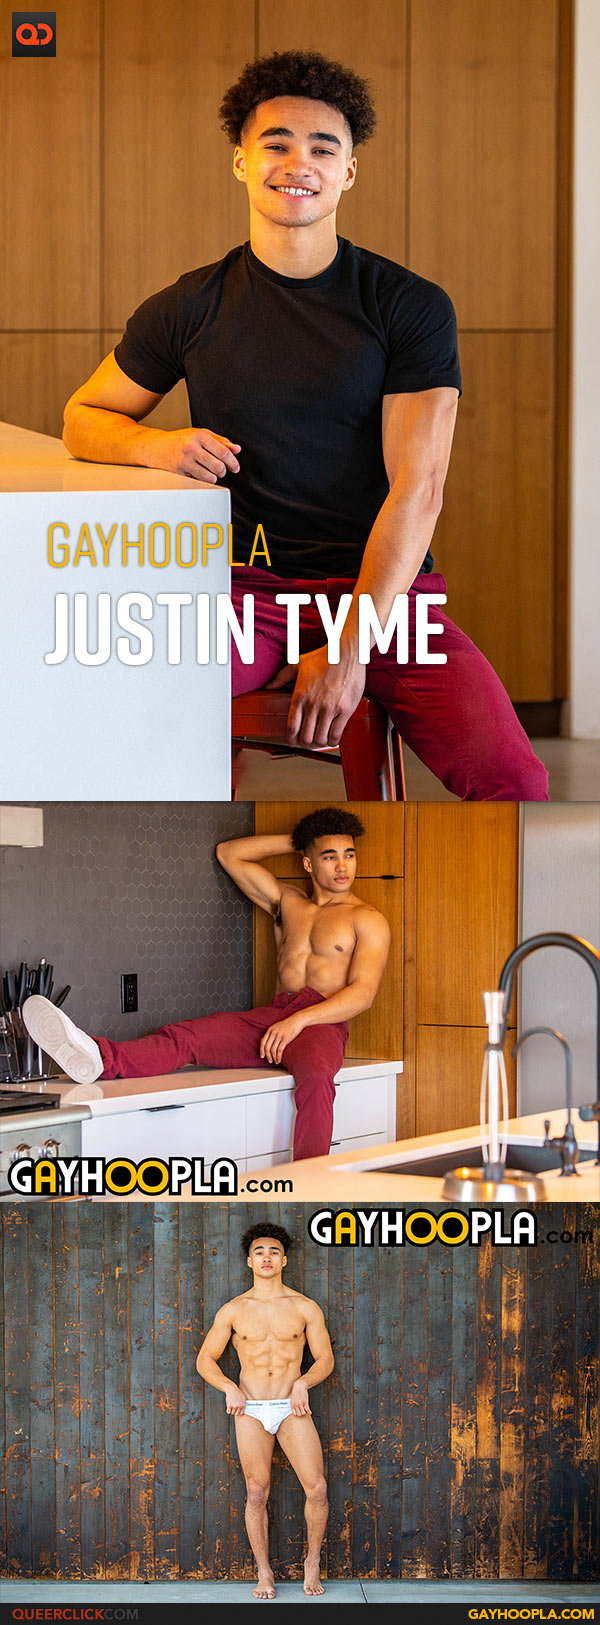 Gayhoopla: Justin Tyme - Hot New Amateur Justin Goes Pro